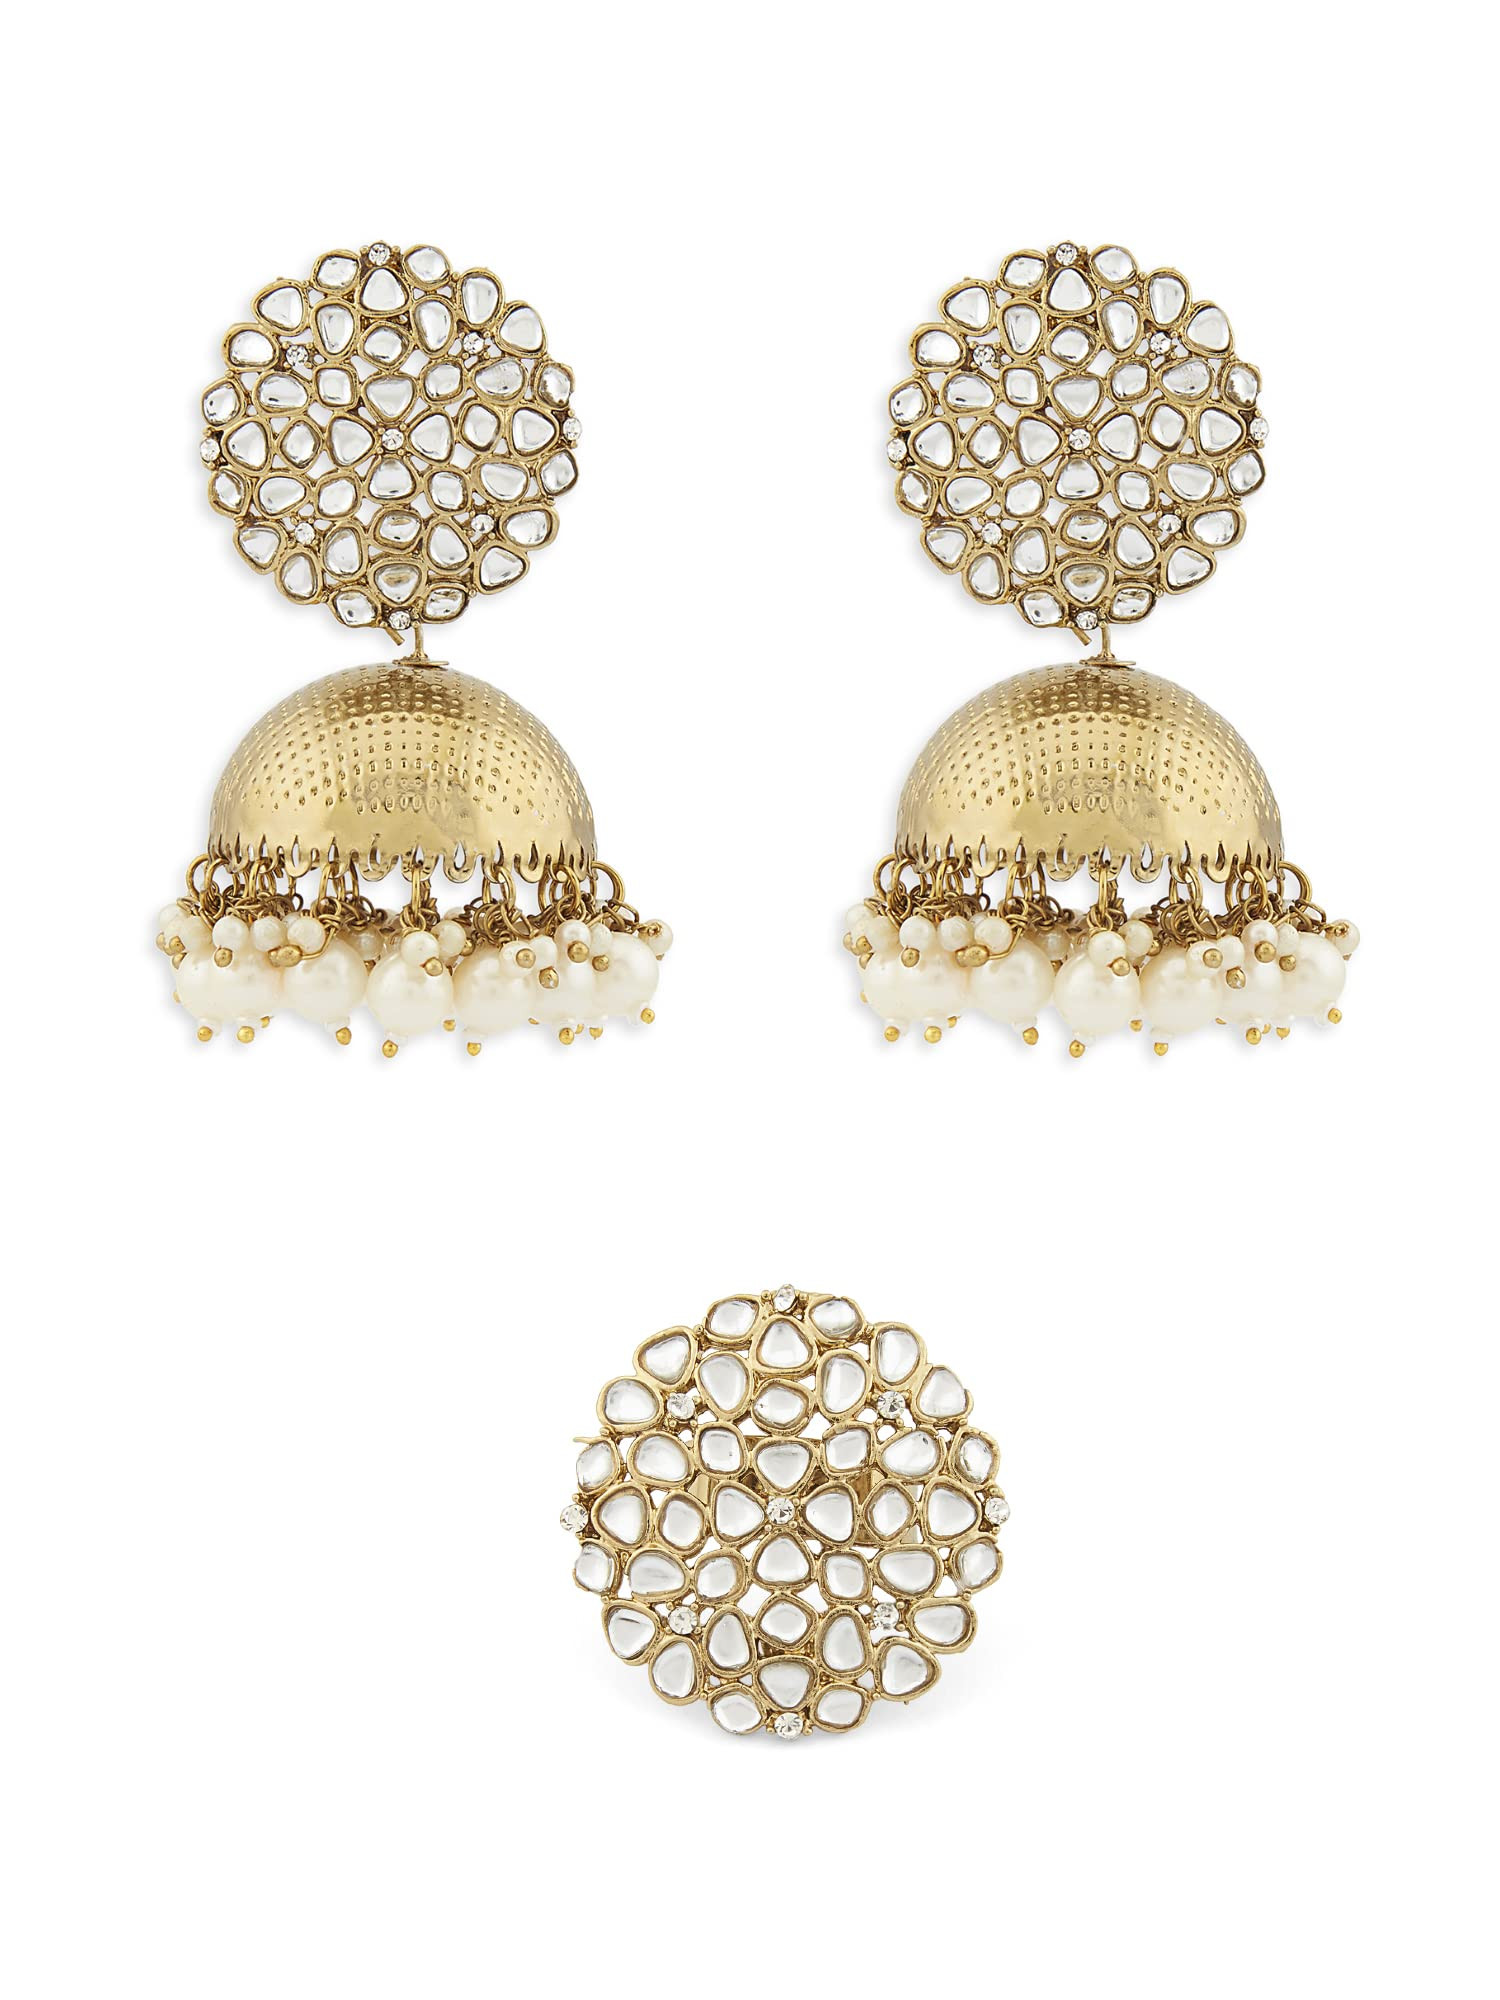 ZAVERI PEARLS Multicolor Stones & Beads Multistrand Beaded Kundan Choker  Necklace Earring & Ring Set For Women-ZPFK15095 | Women's jewelry sets, Ring  earrings, Stone beads